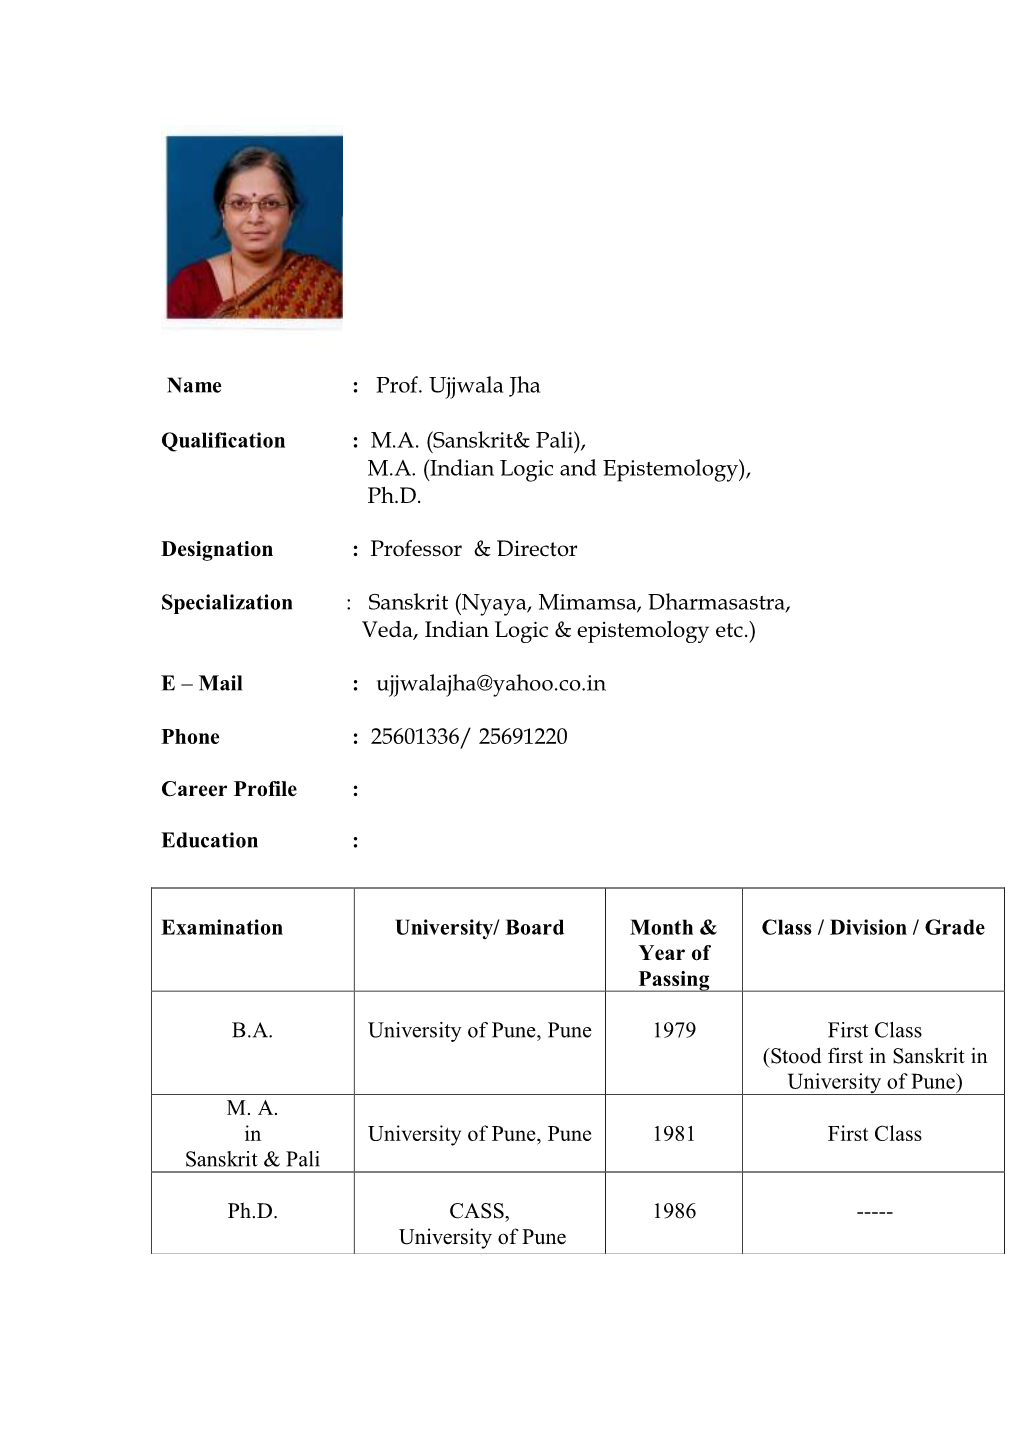 Name : Prof. Ujjwala Jha Qualification : MA (Sanskrit& Pali)